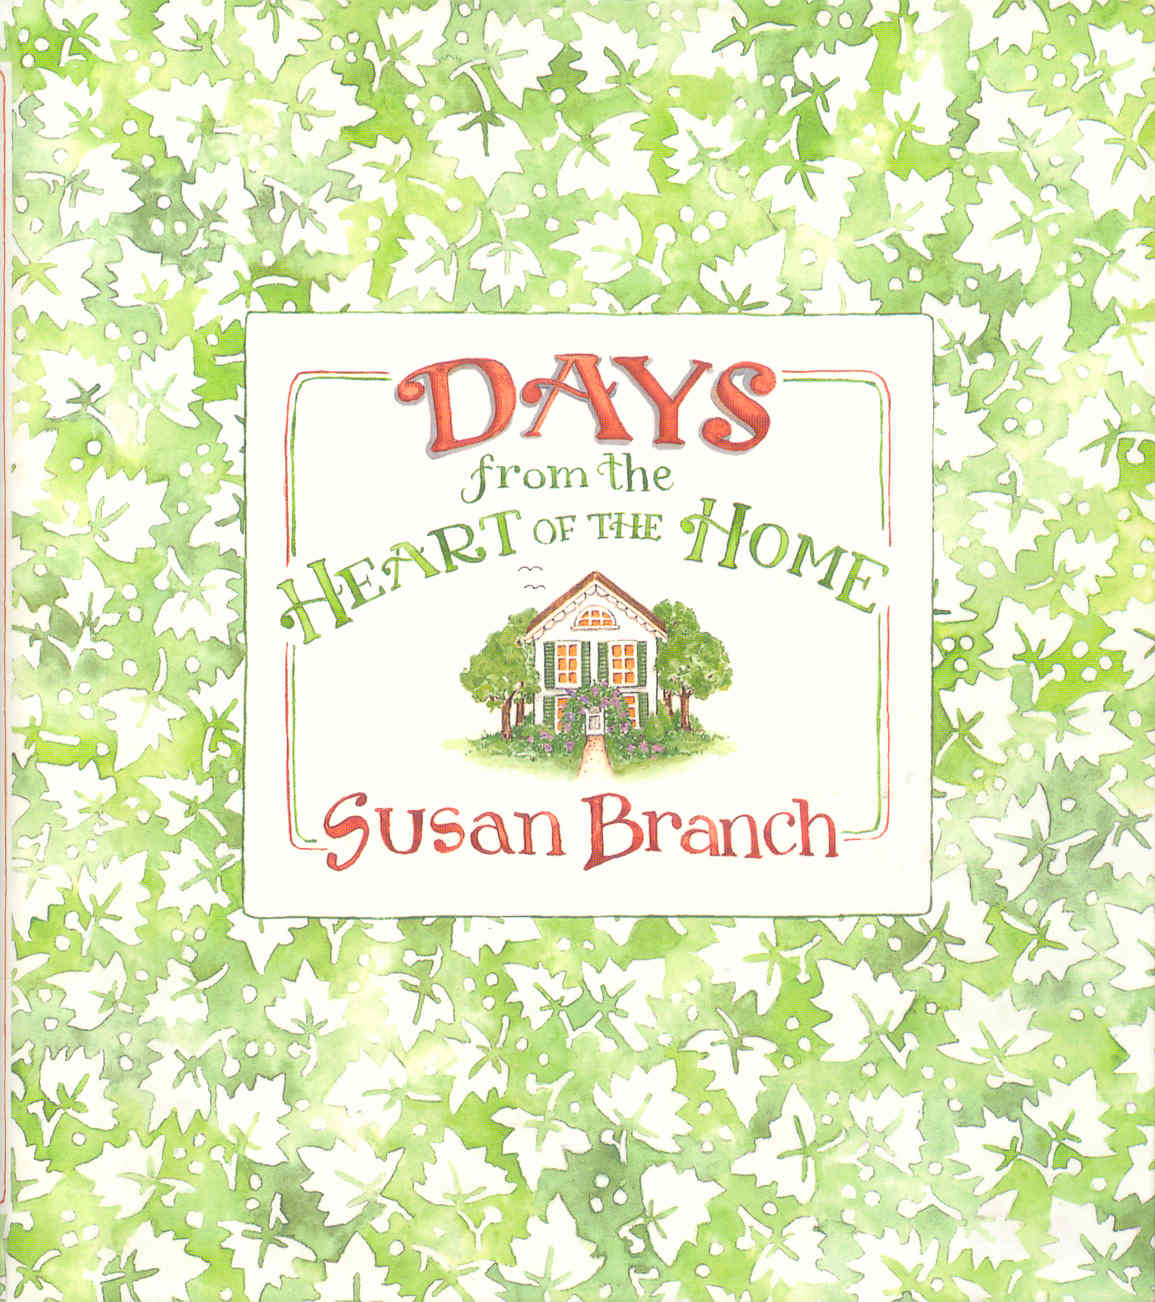 7 days книги. Susan Branch книги. Heart of the Home книга. Heart of the Home Susan Branch. Susan Branch книги купить.